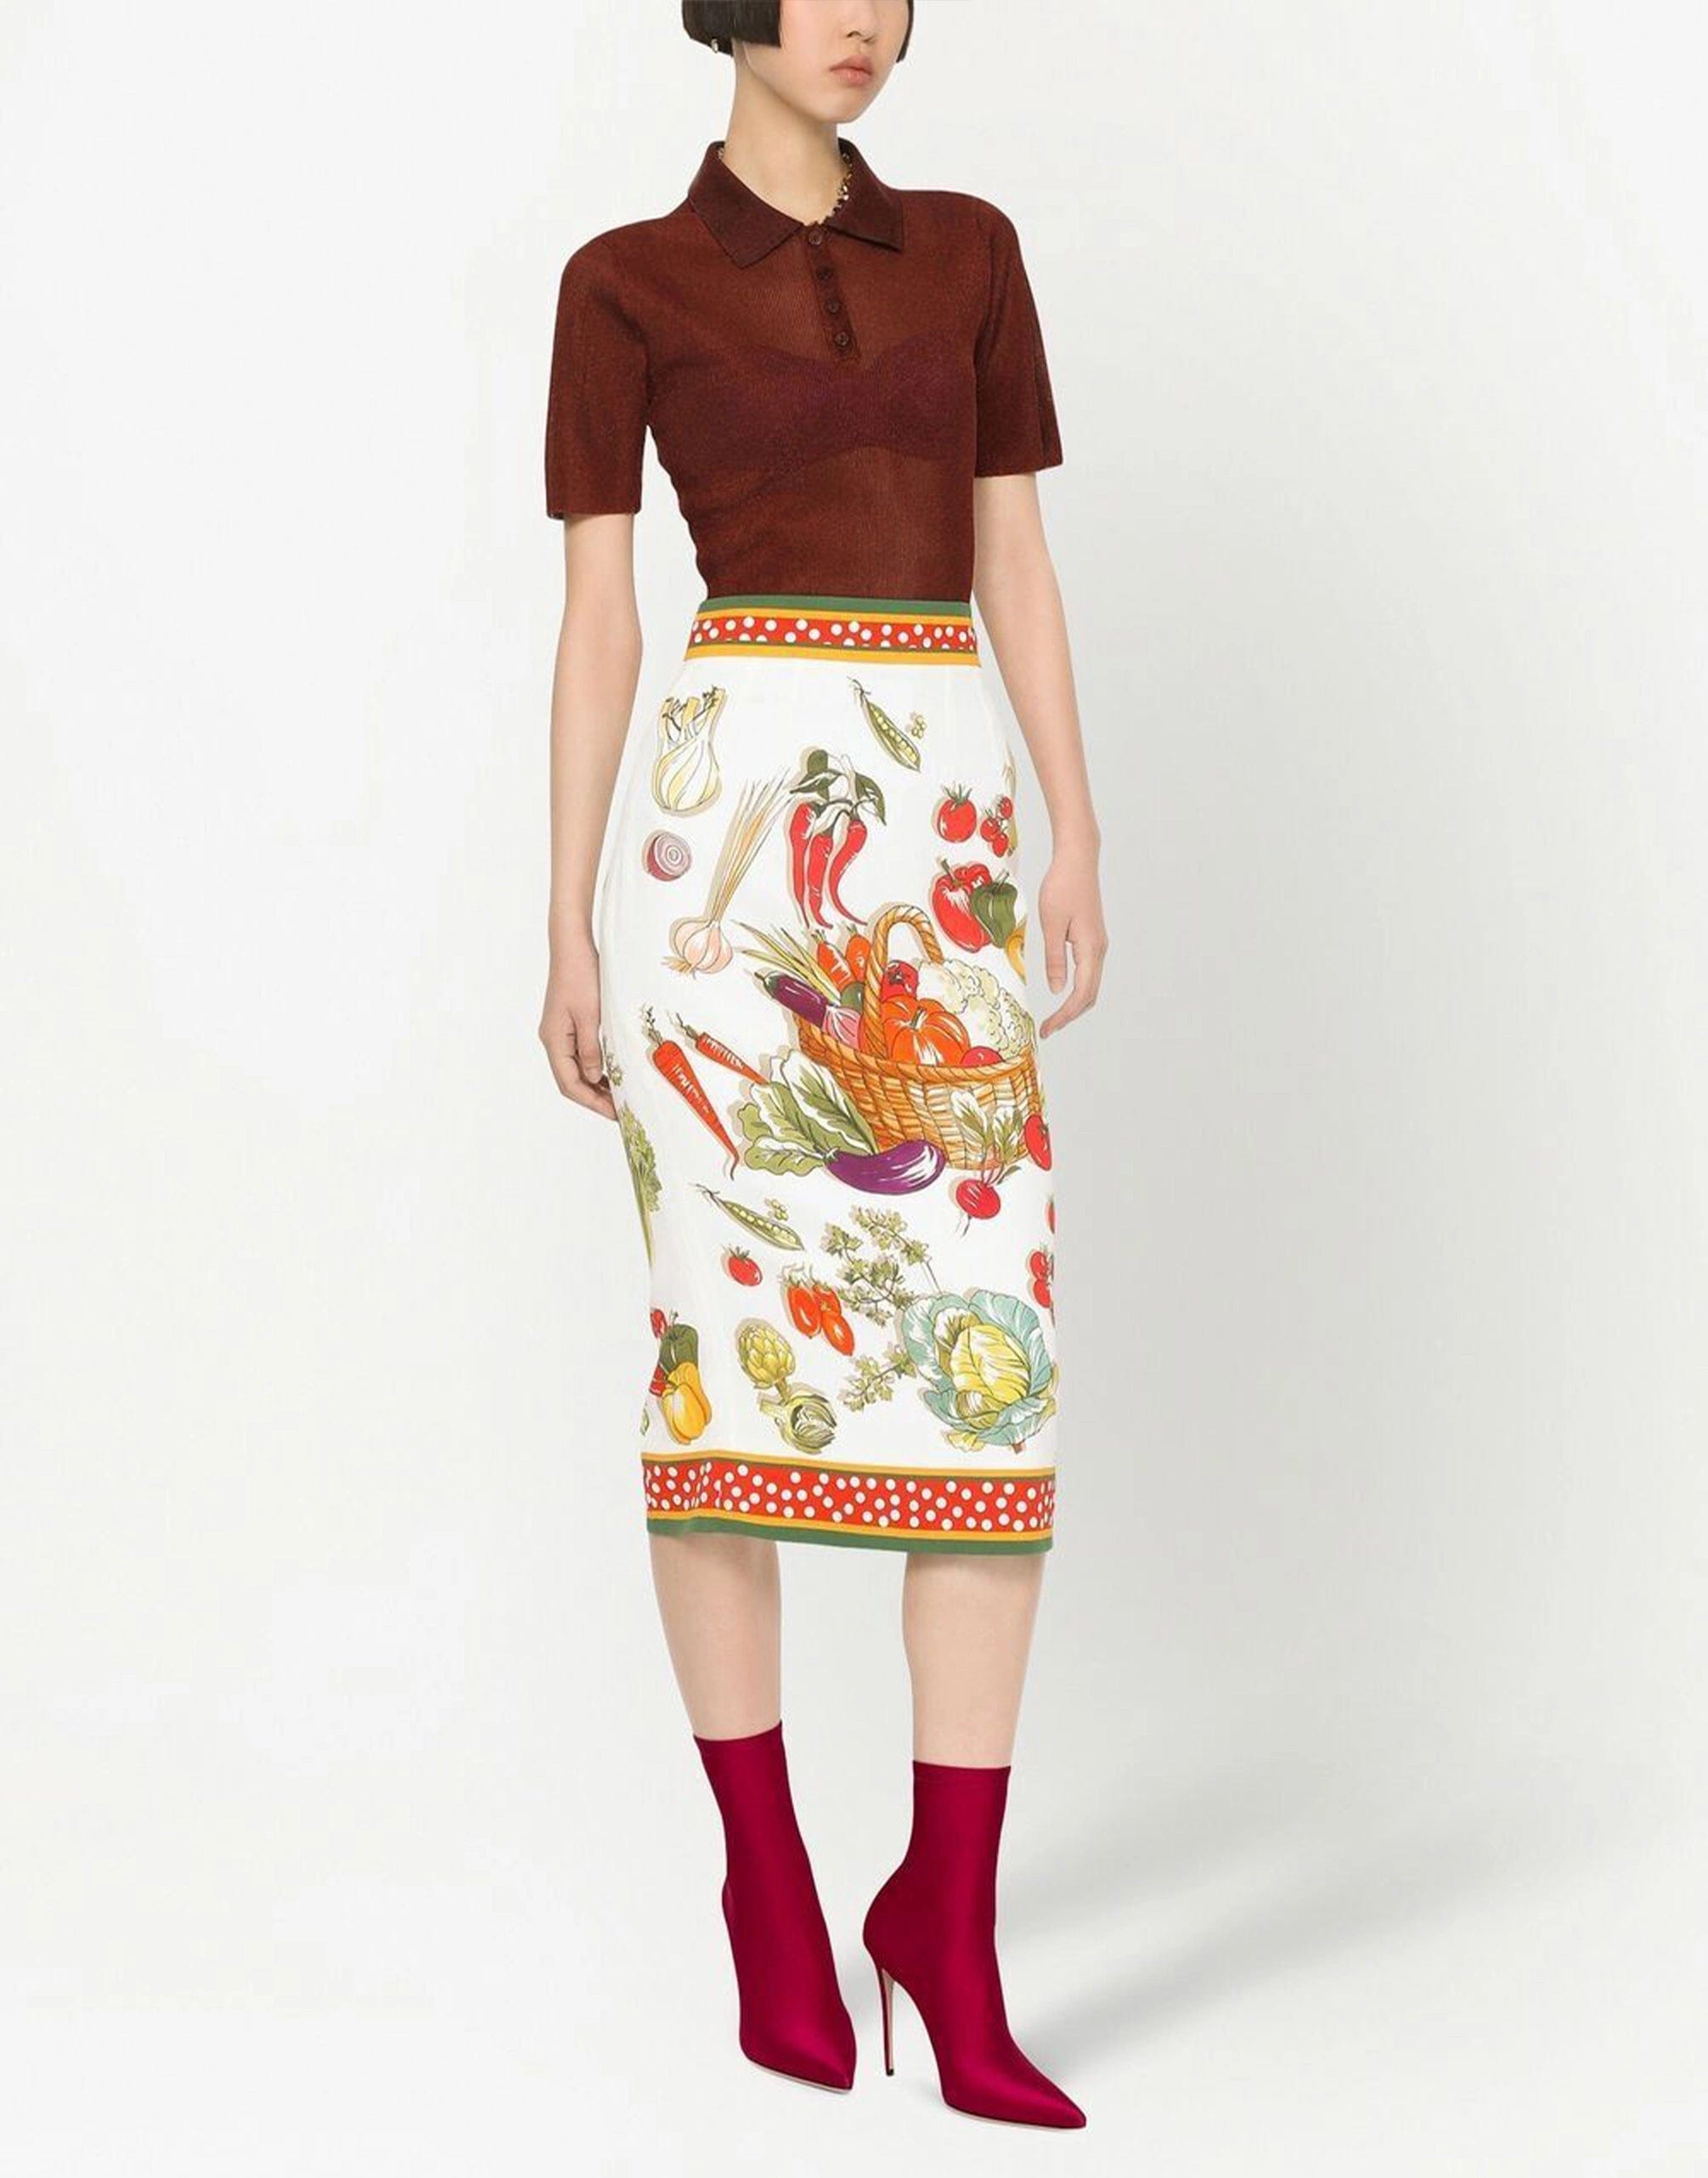 Dolce & Gabbana Vegetable-Print Pencil Skirt